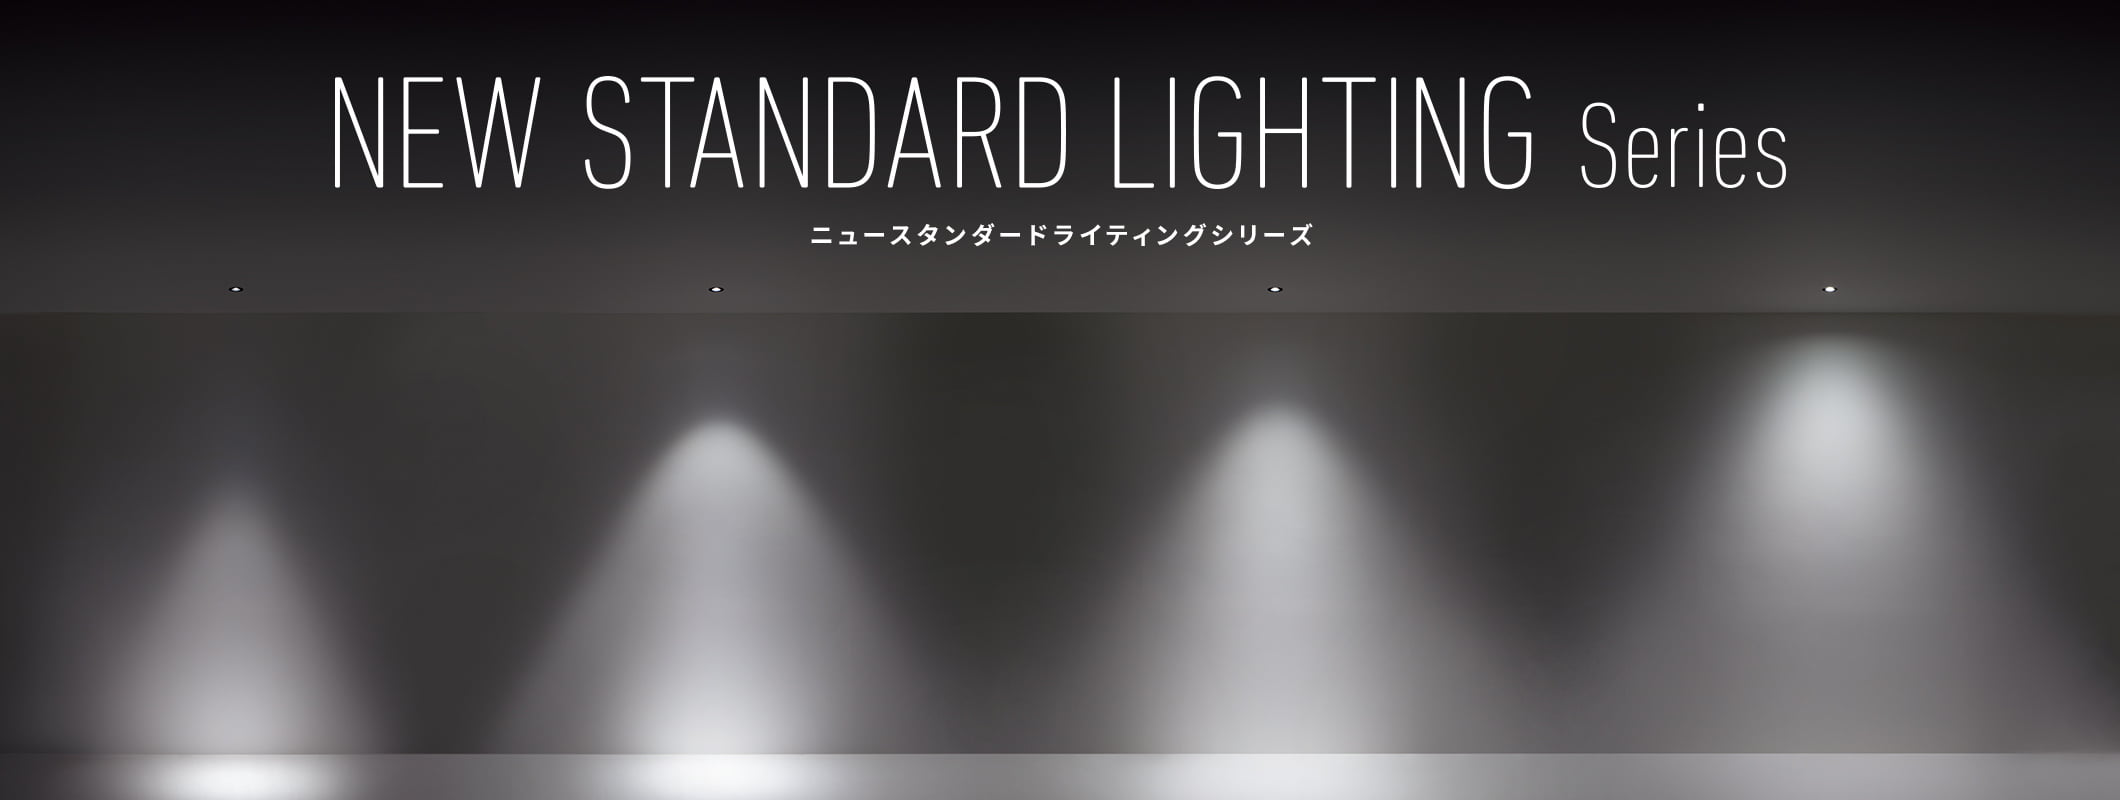 New Standard Lighting Series ニュースタンダードライティングシリーズ